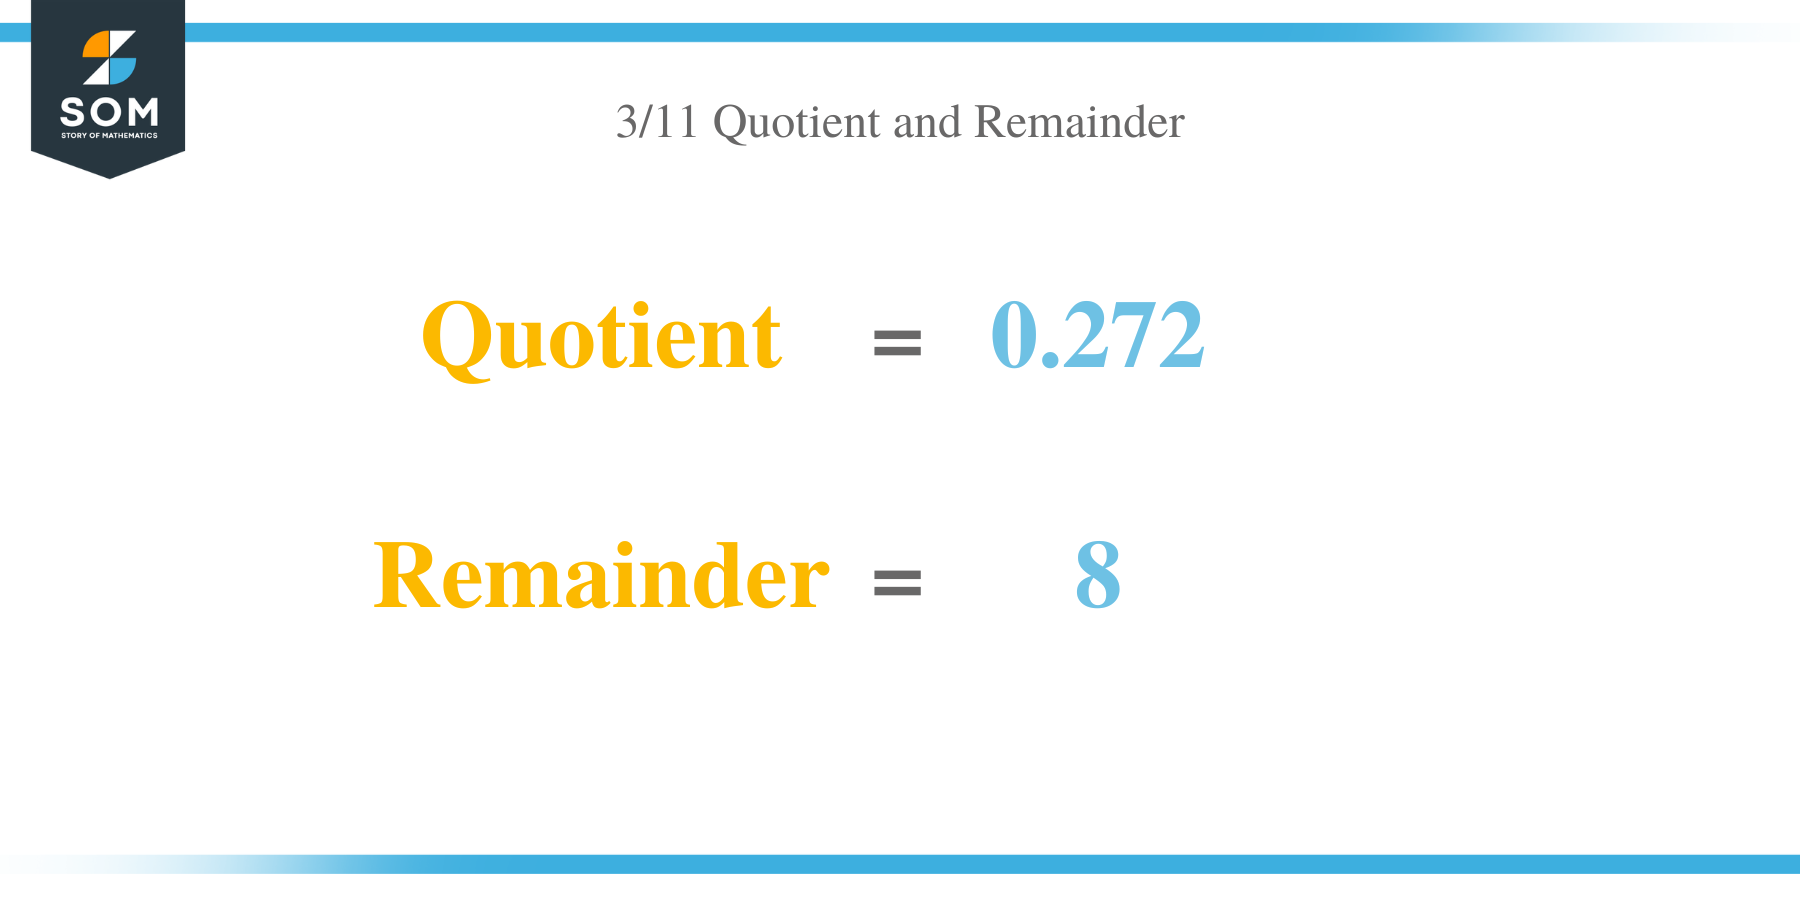 Quotient and remainder of 3 per 11